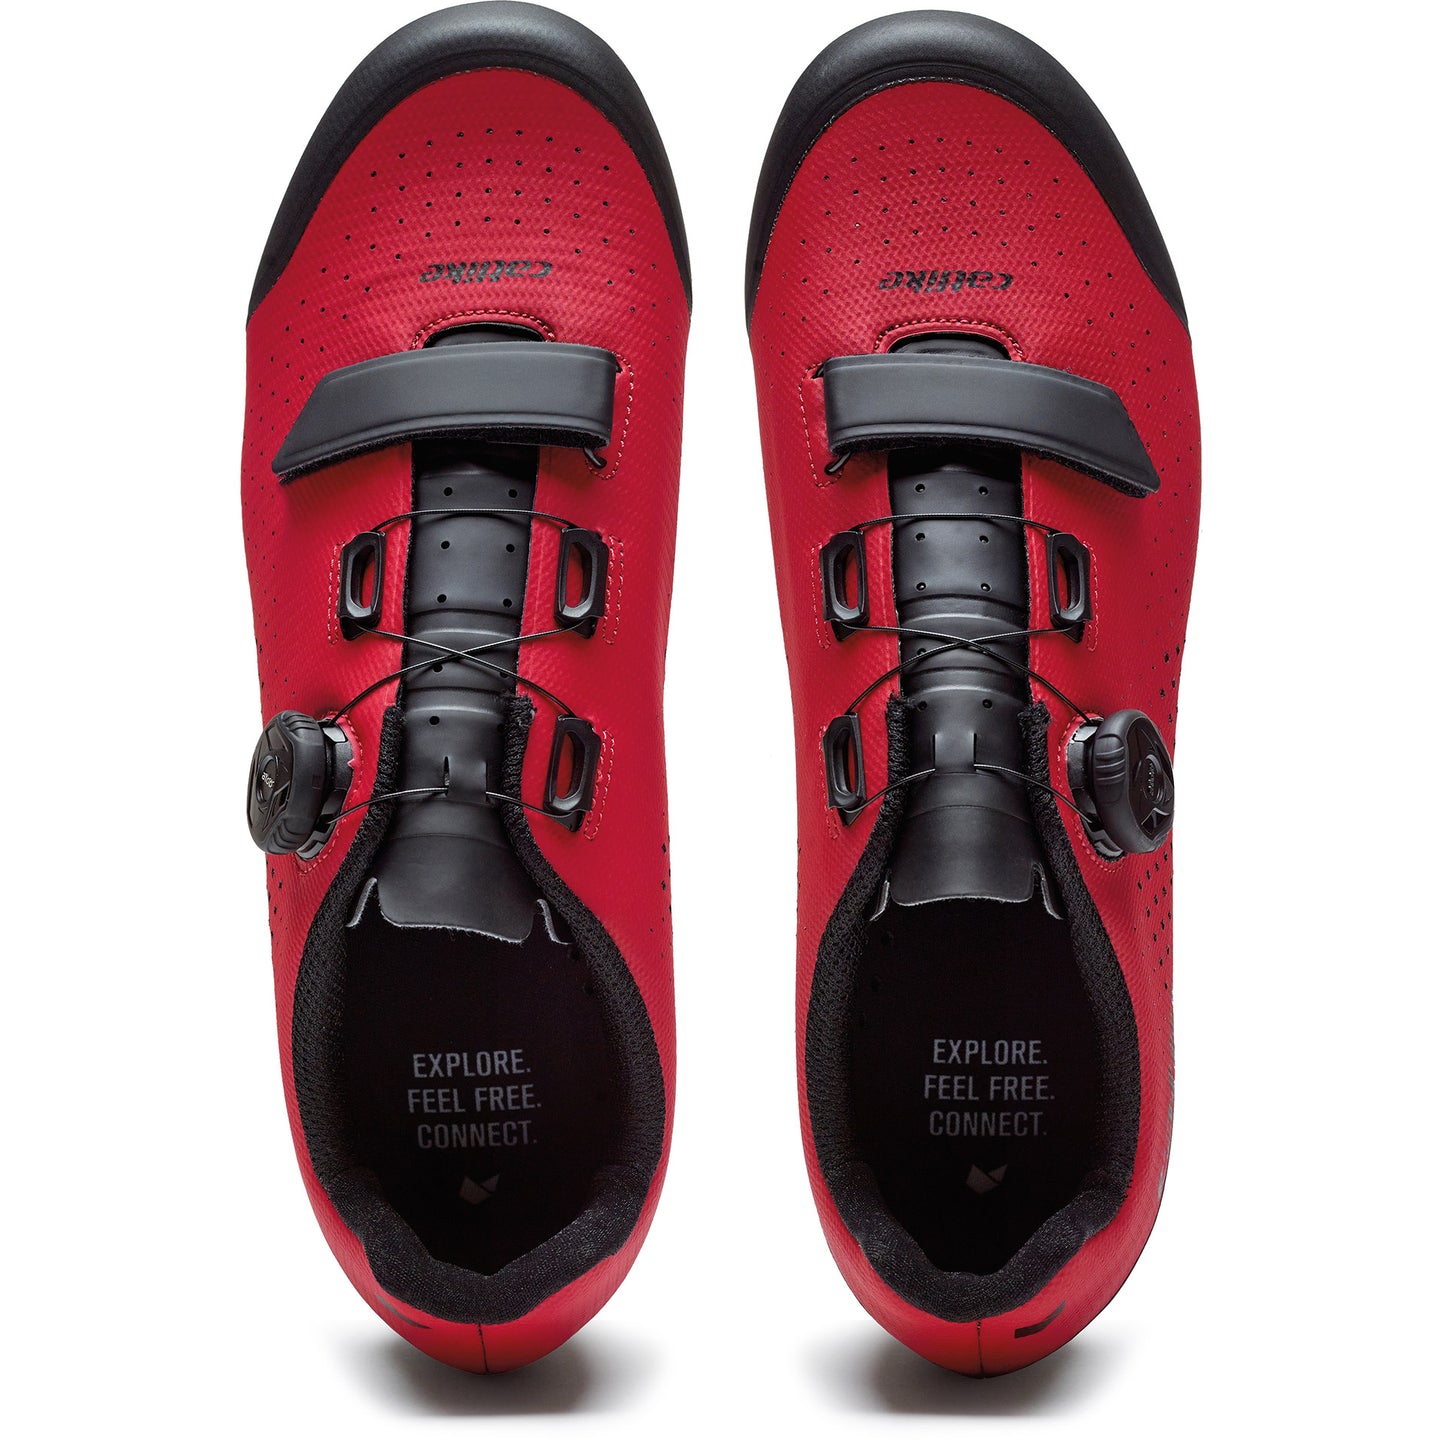 Zapatos buzaglo kompact'o x1 mtb nylon 43 rojo